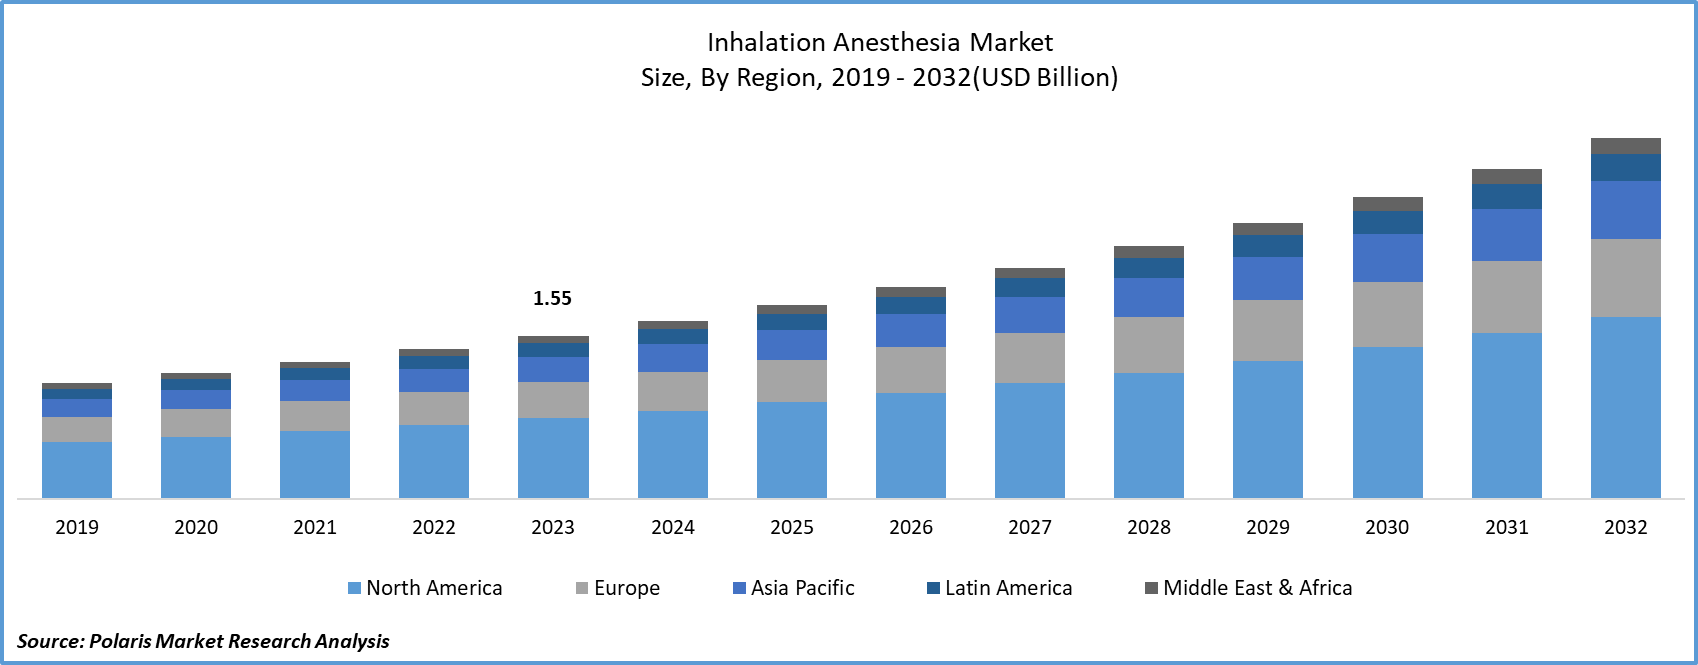 Inhalation Anesthesia Market Size